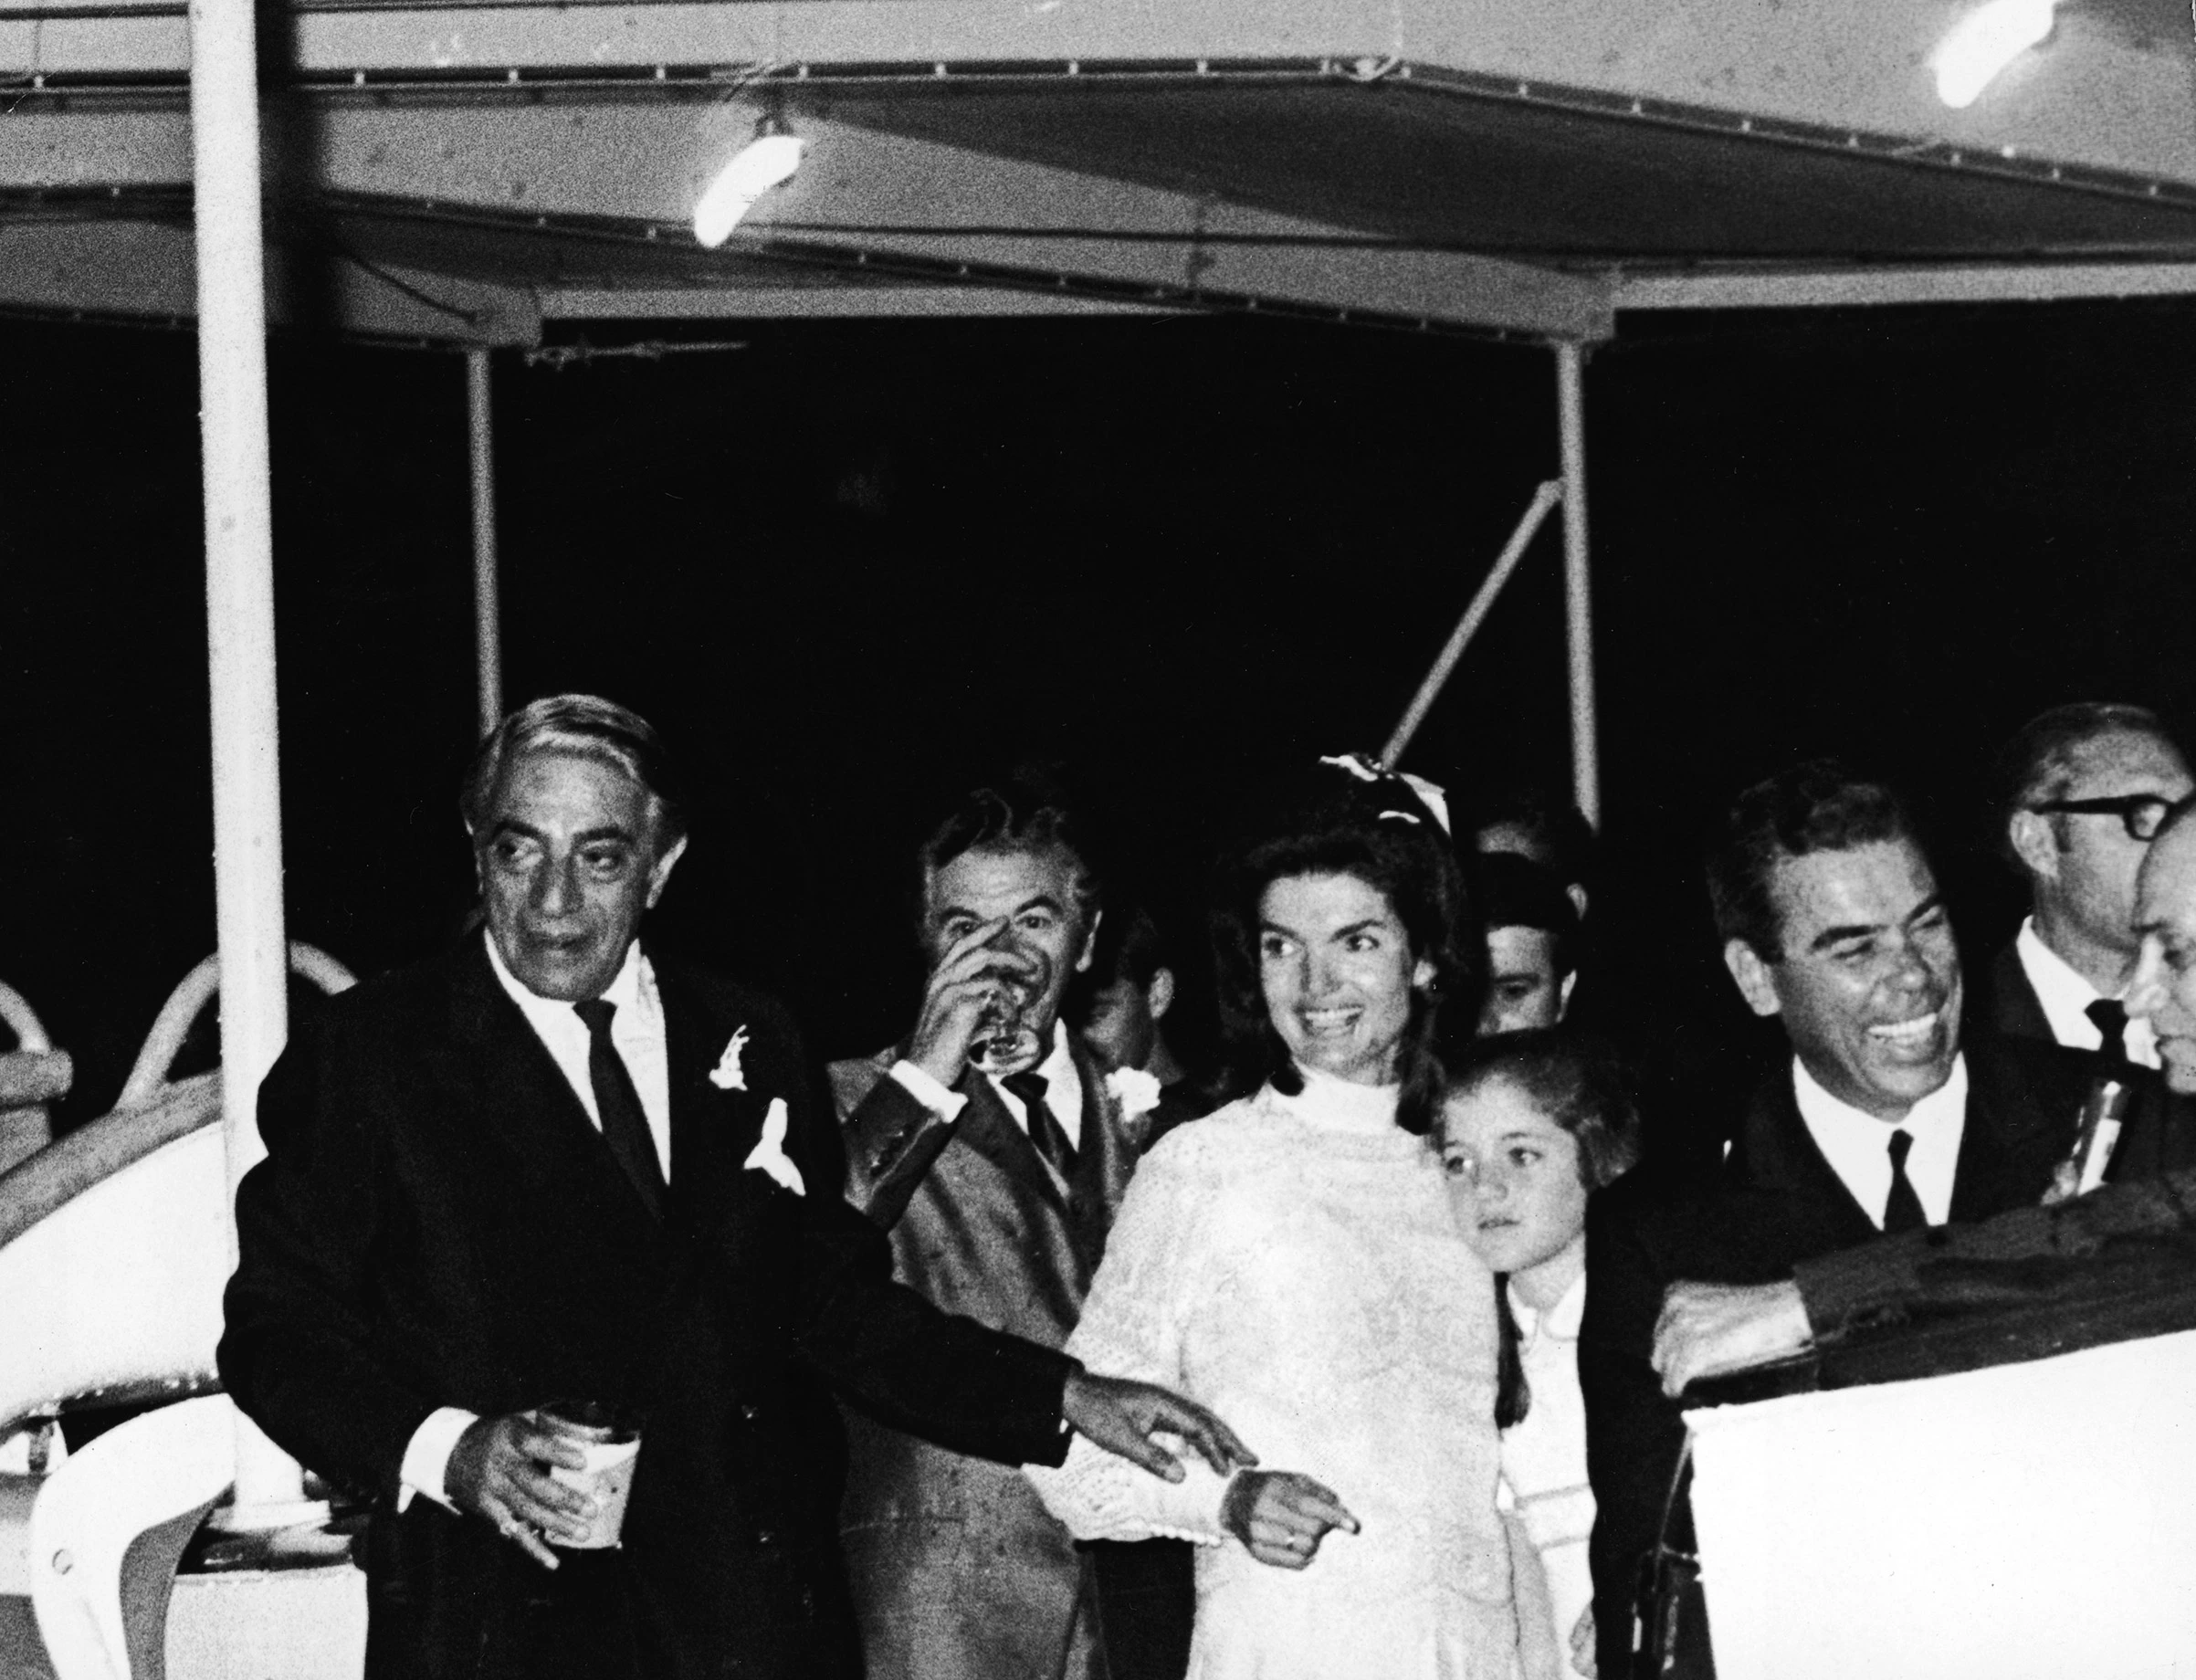 1968 Jacqueline Kennedy marries Aristotle Onassis